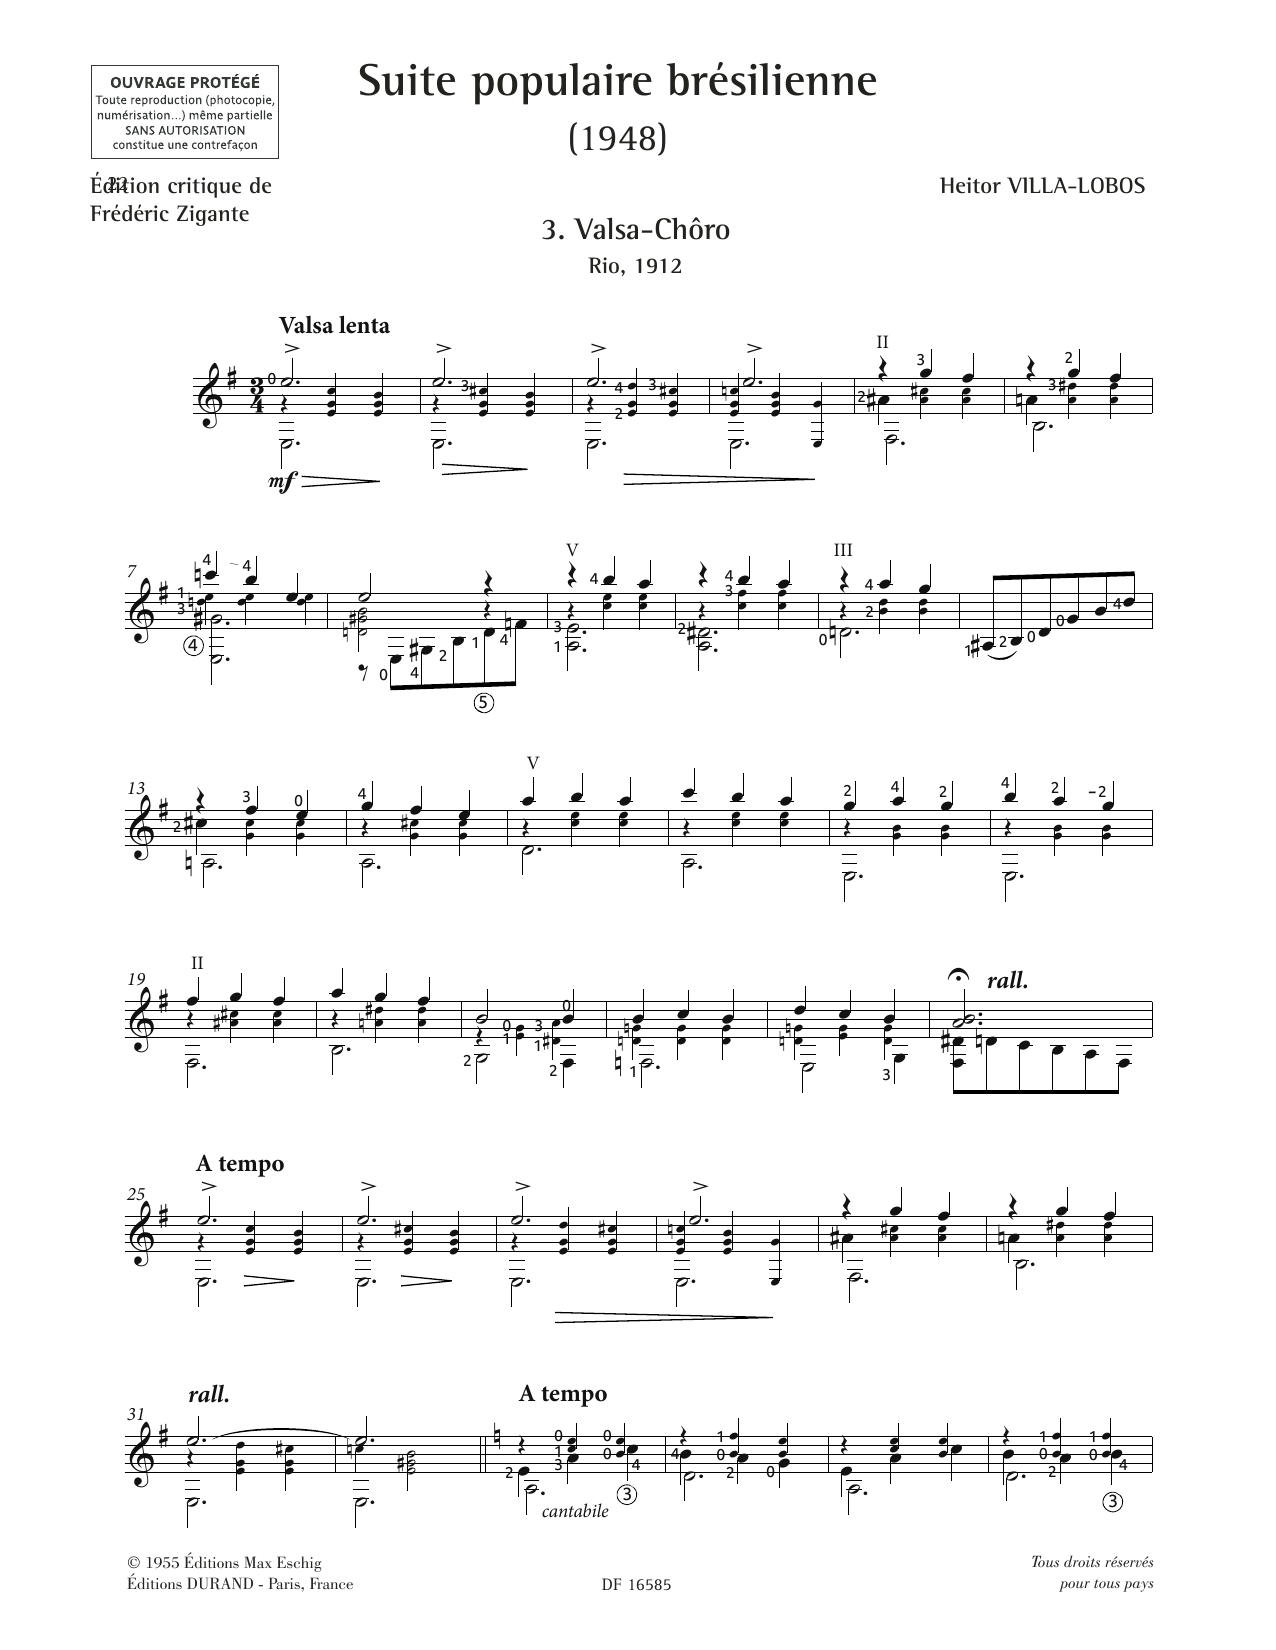 Heitor Villa-Lobos Valsa-Choro sheet music notes and chords arranged for Solo Guitar